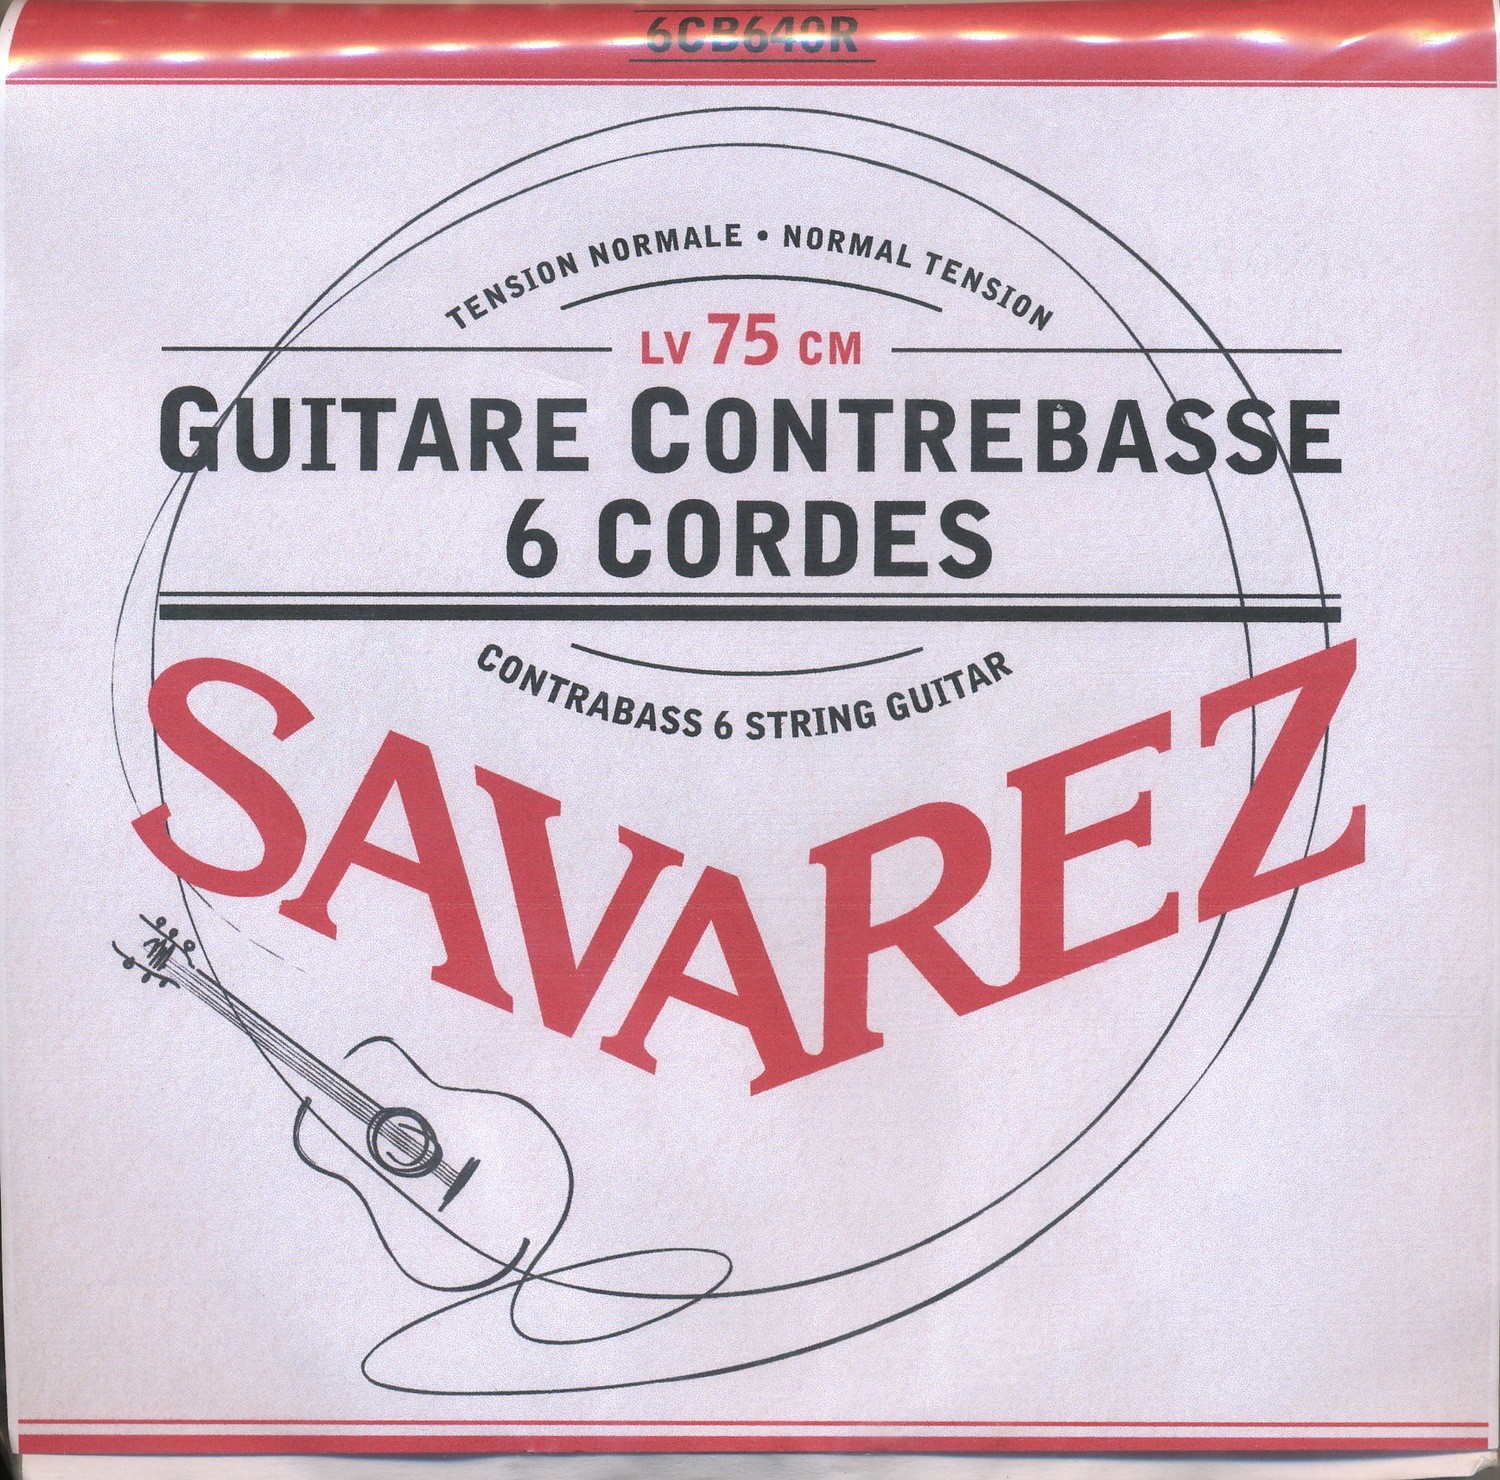 Contrabass Guitar Strings - Savarez - 6CB640R - Set of 6 Strings - 750mm Scale Length